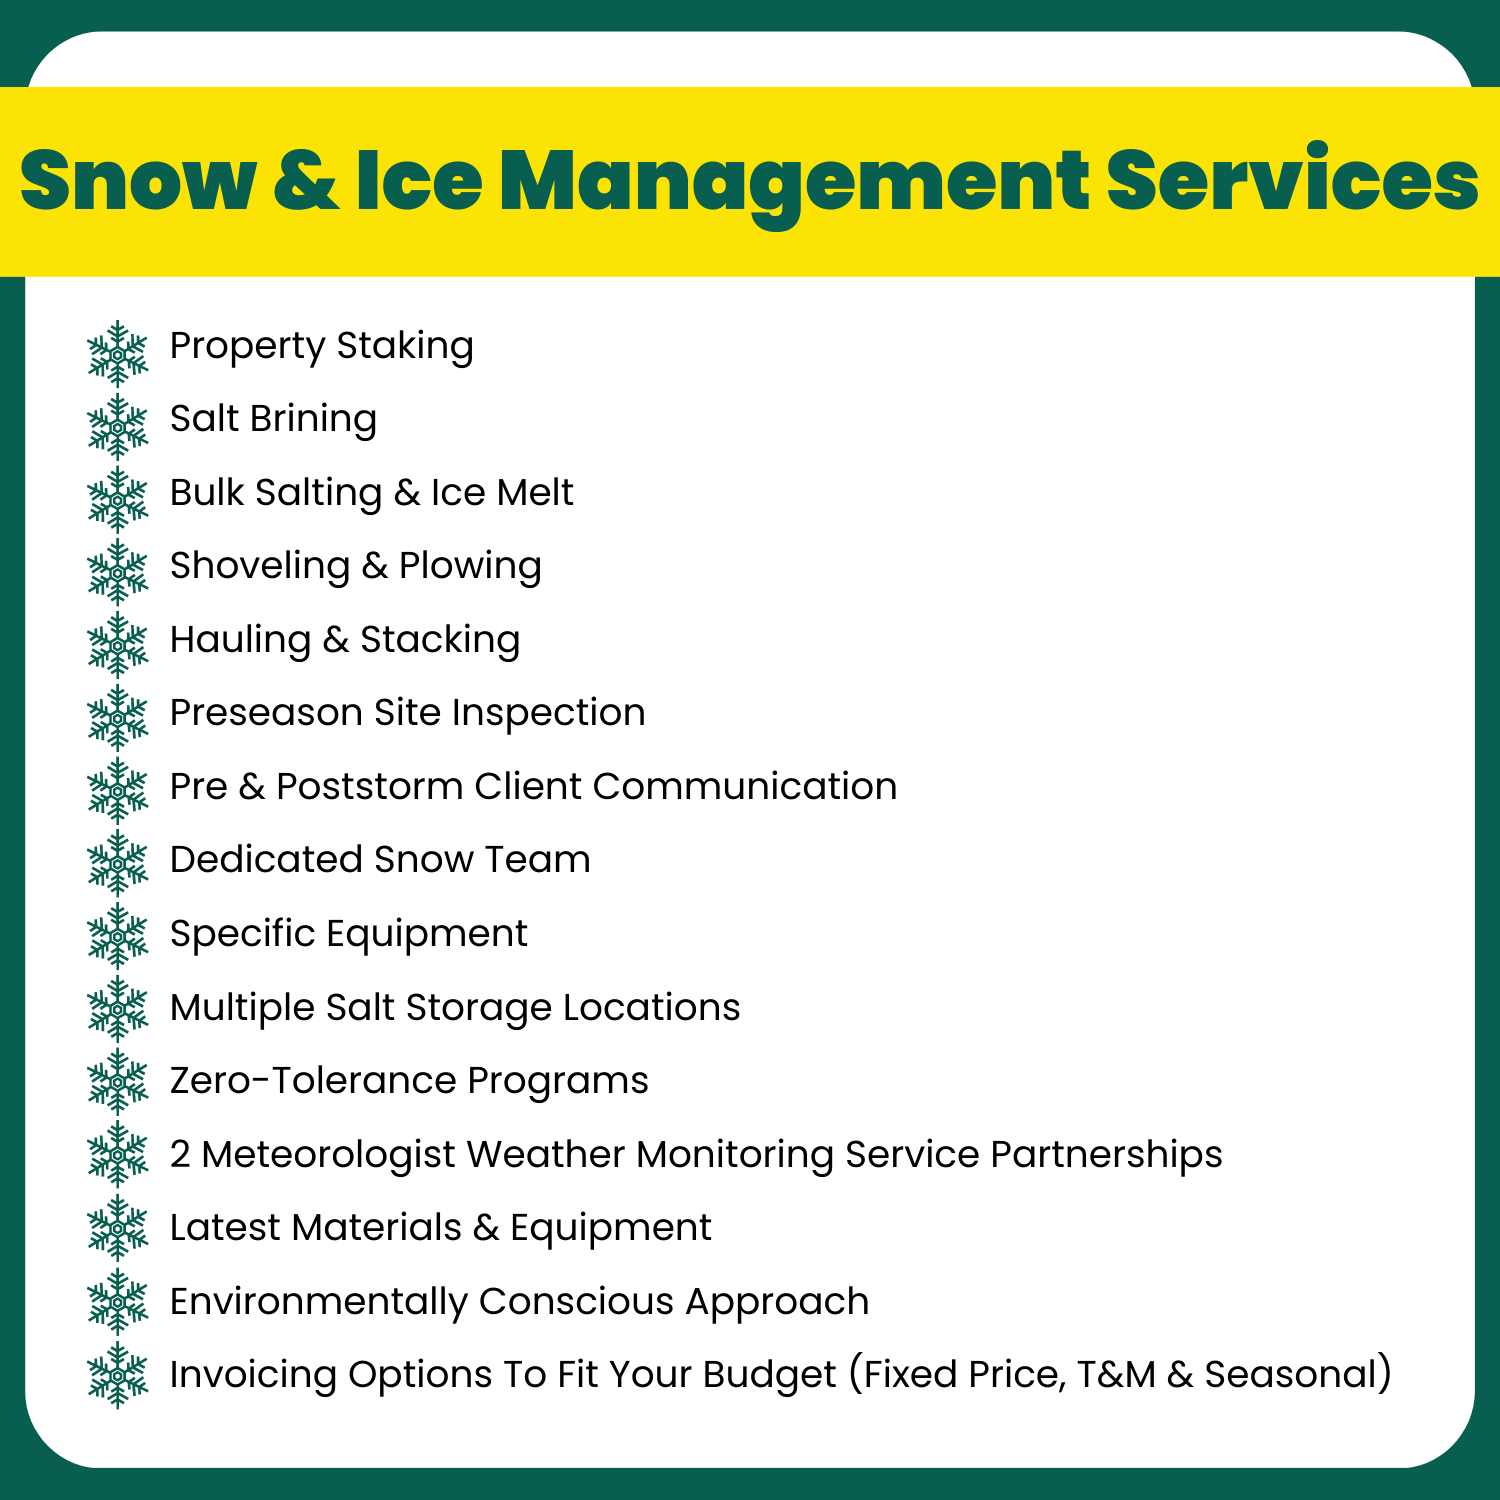 Snow & Ice Management Services